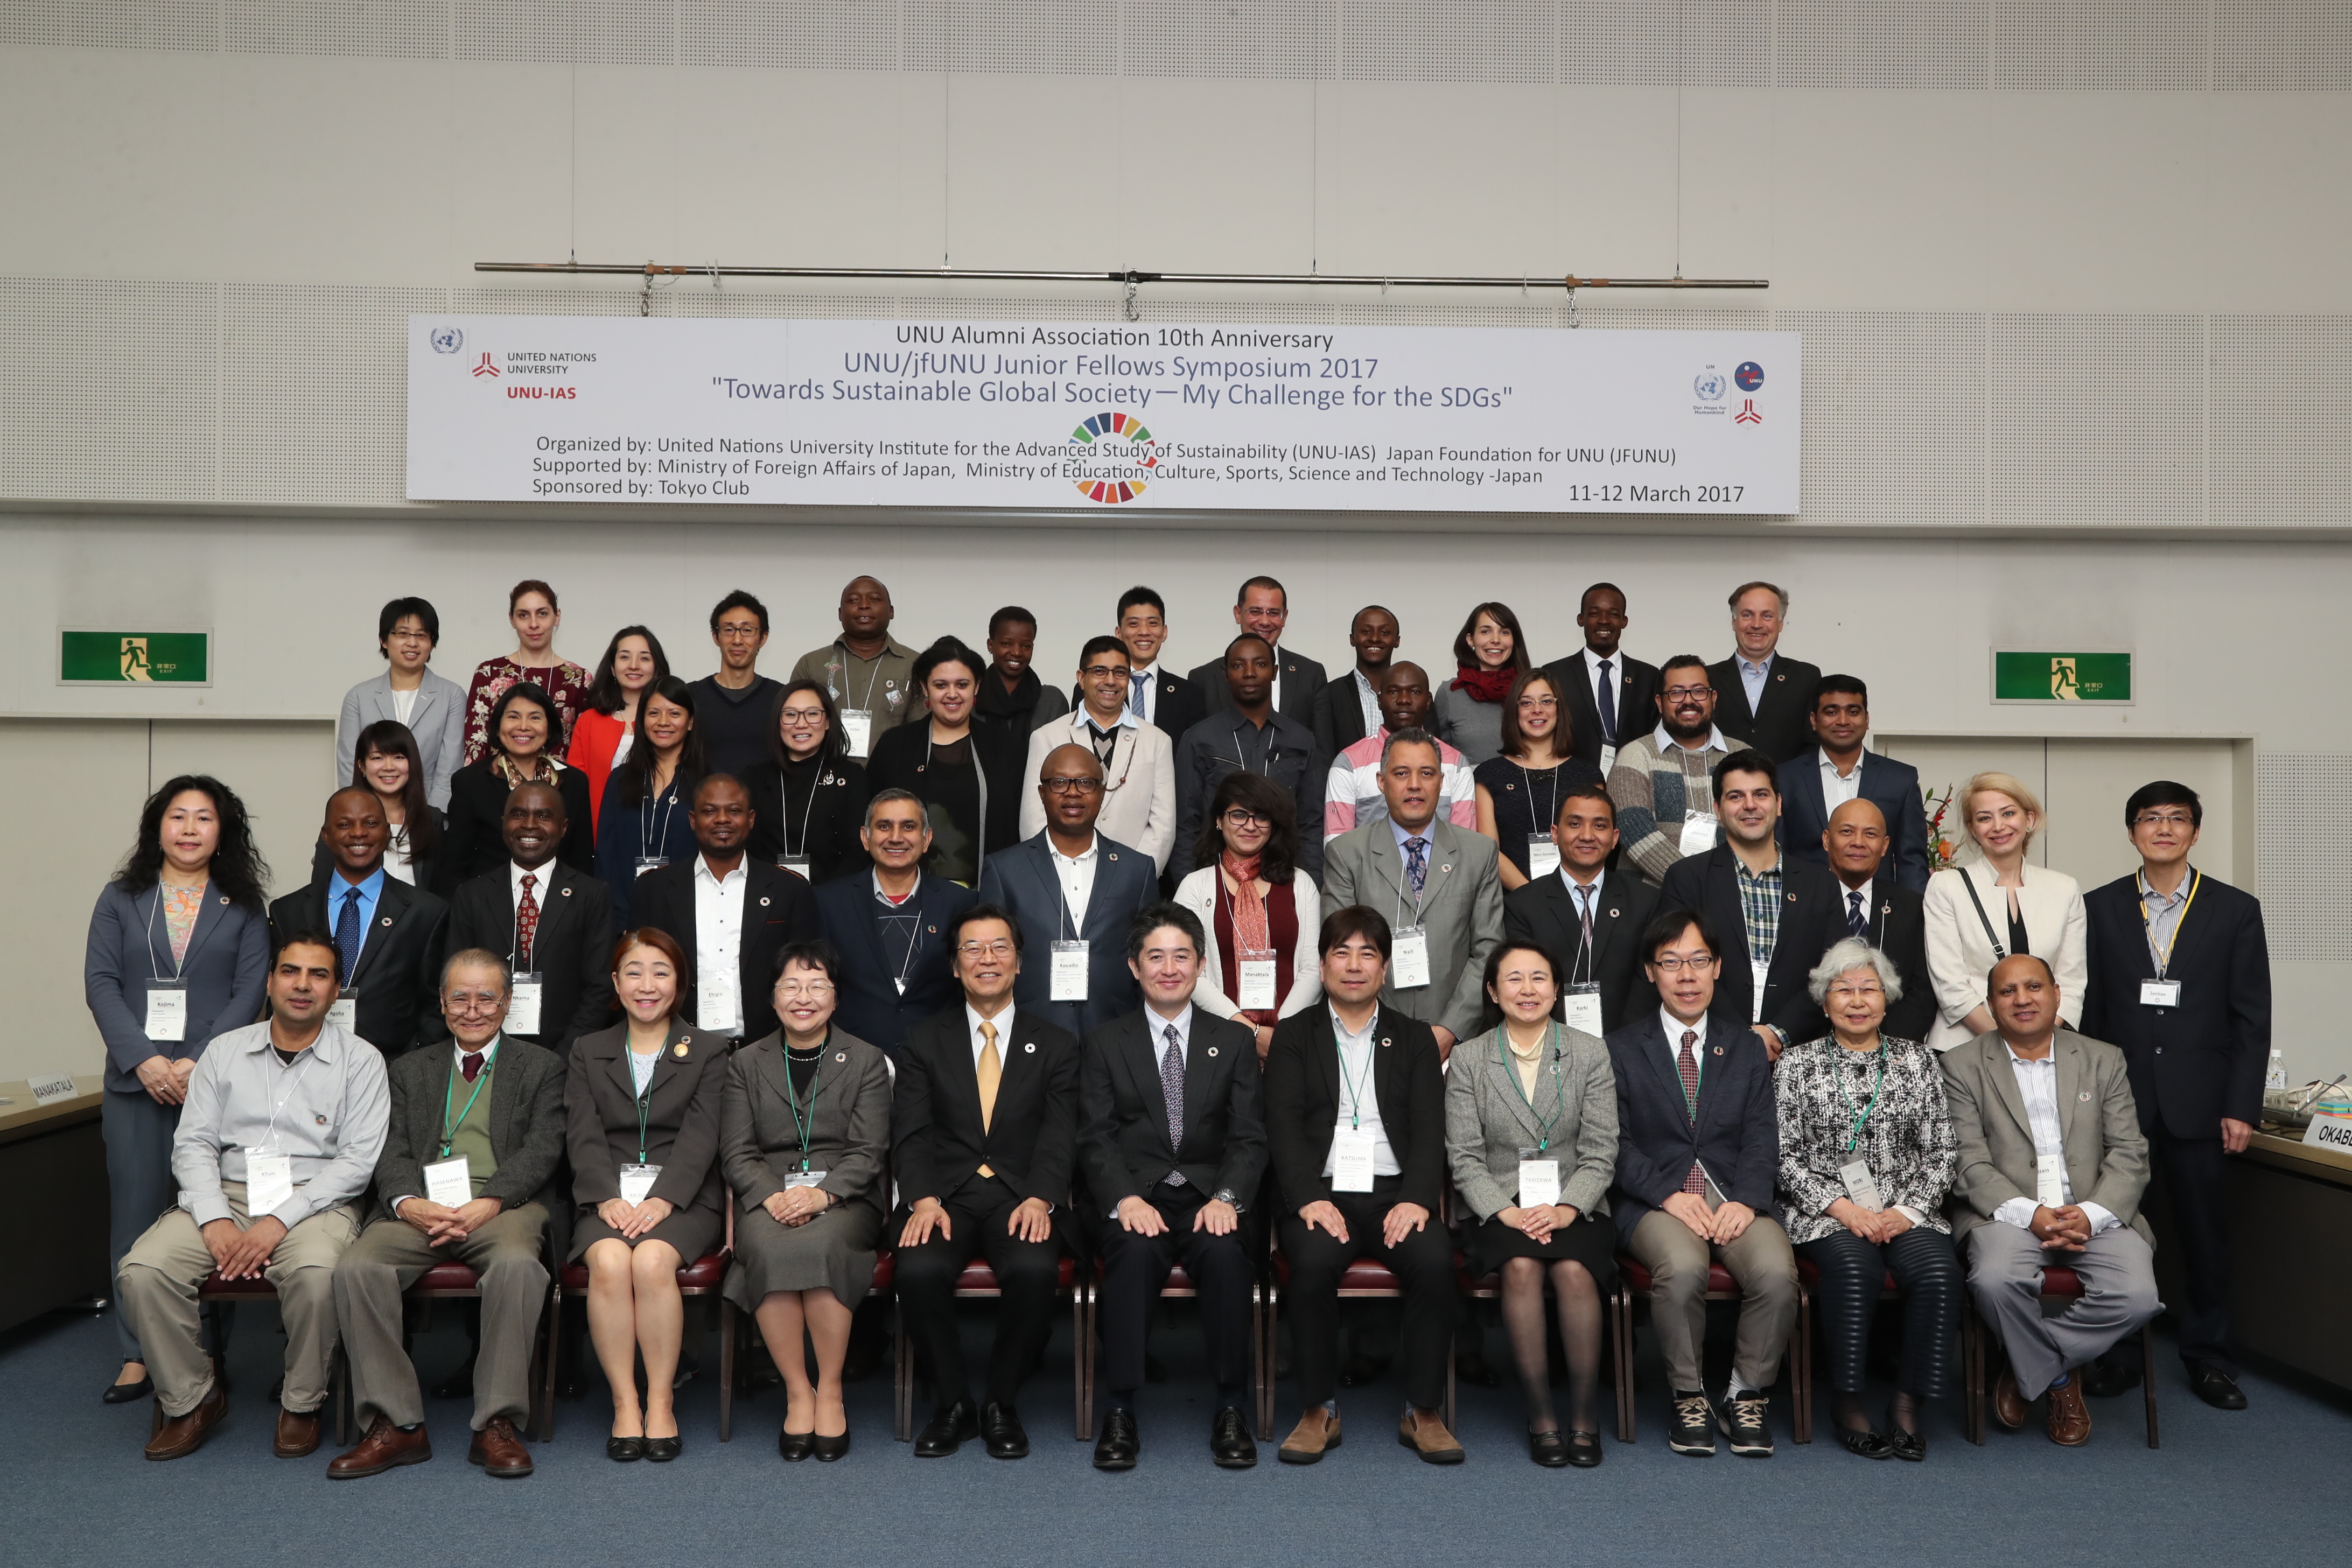 Group photo of participants at the UNU Alumni Symposium